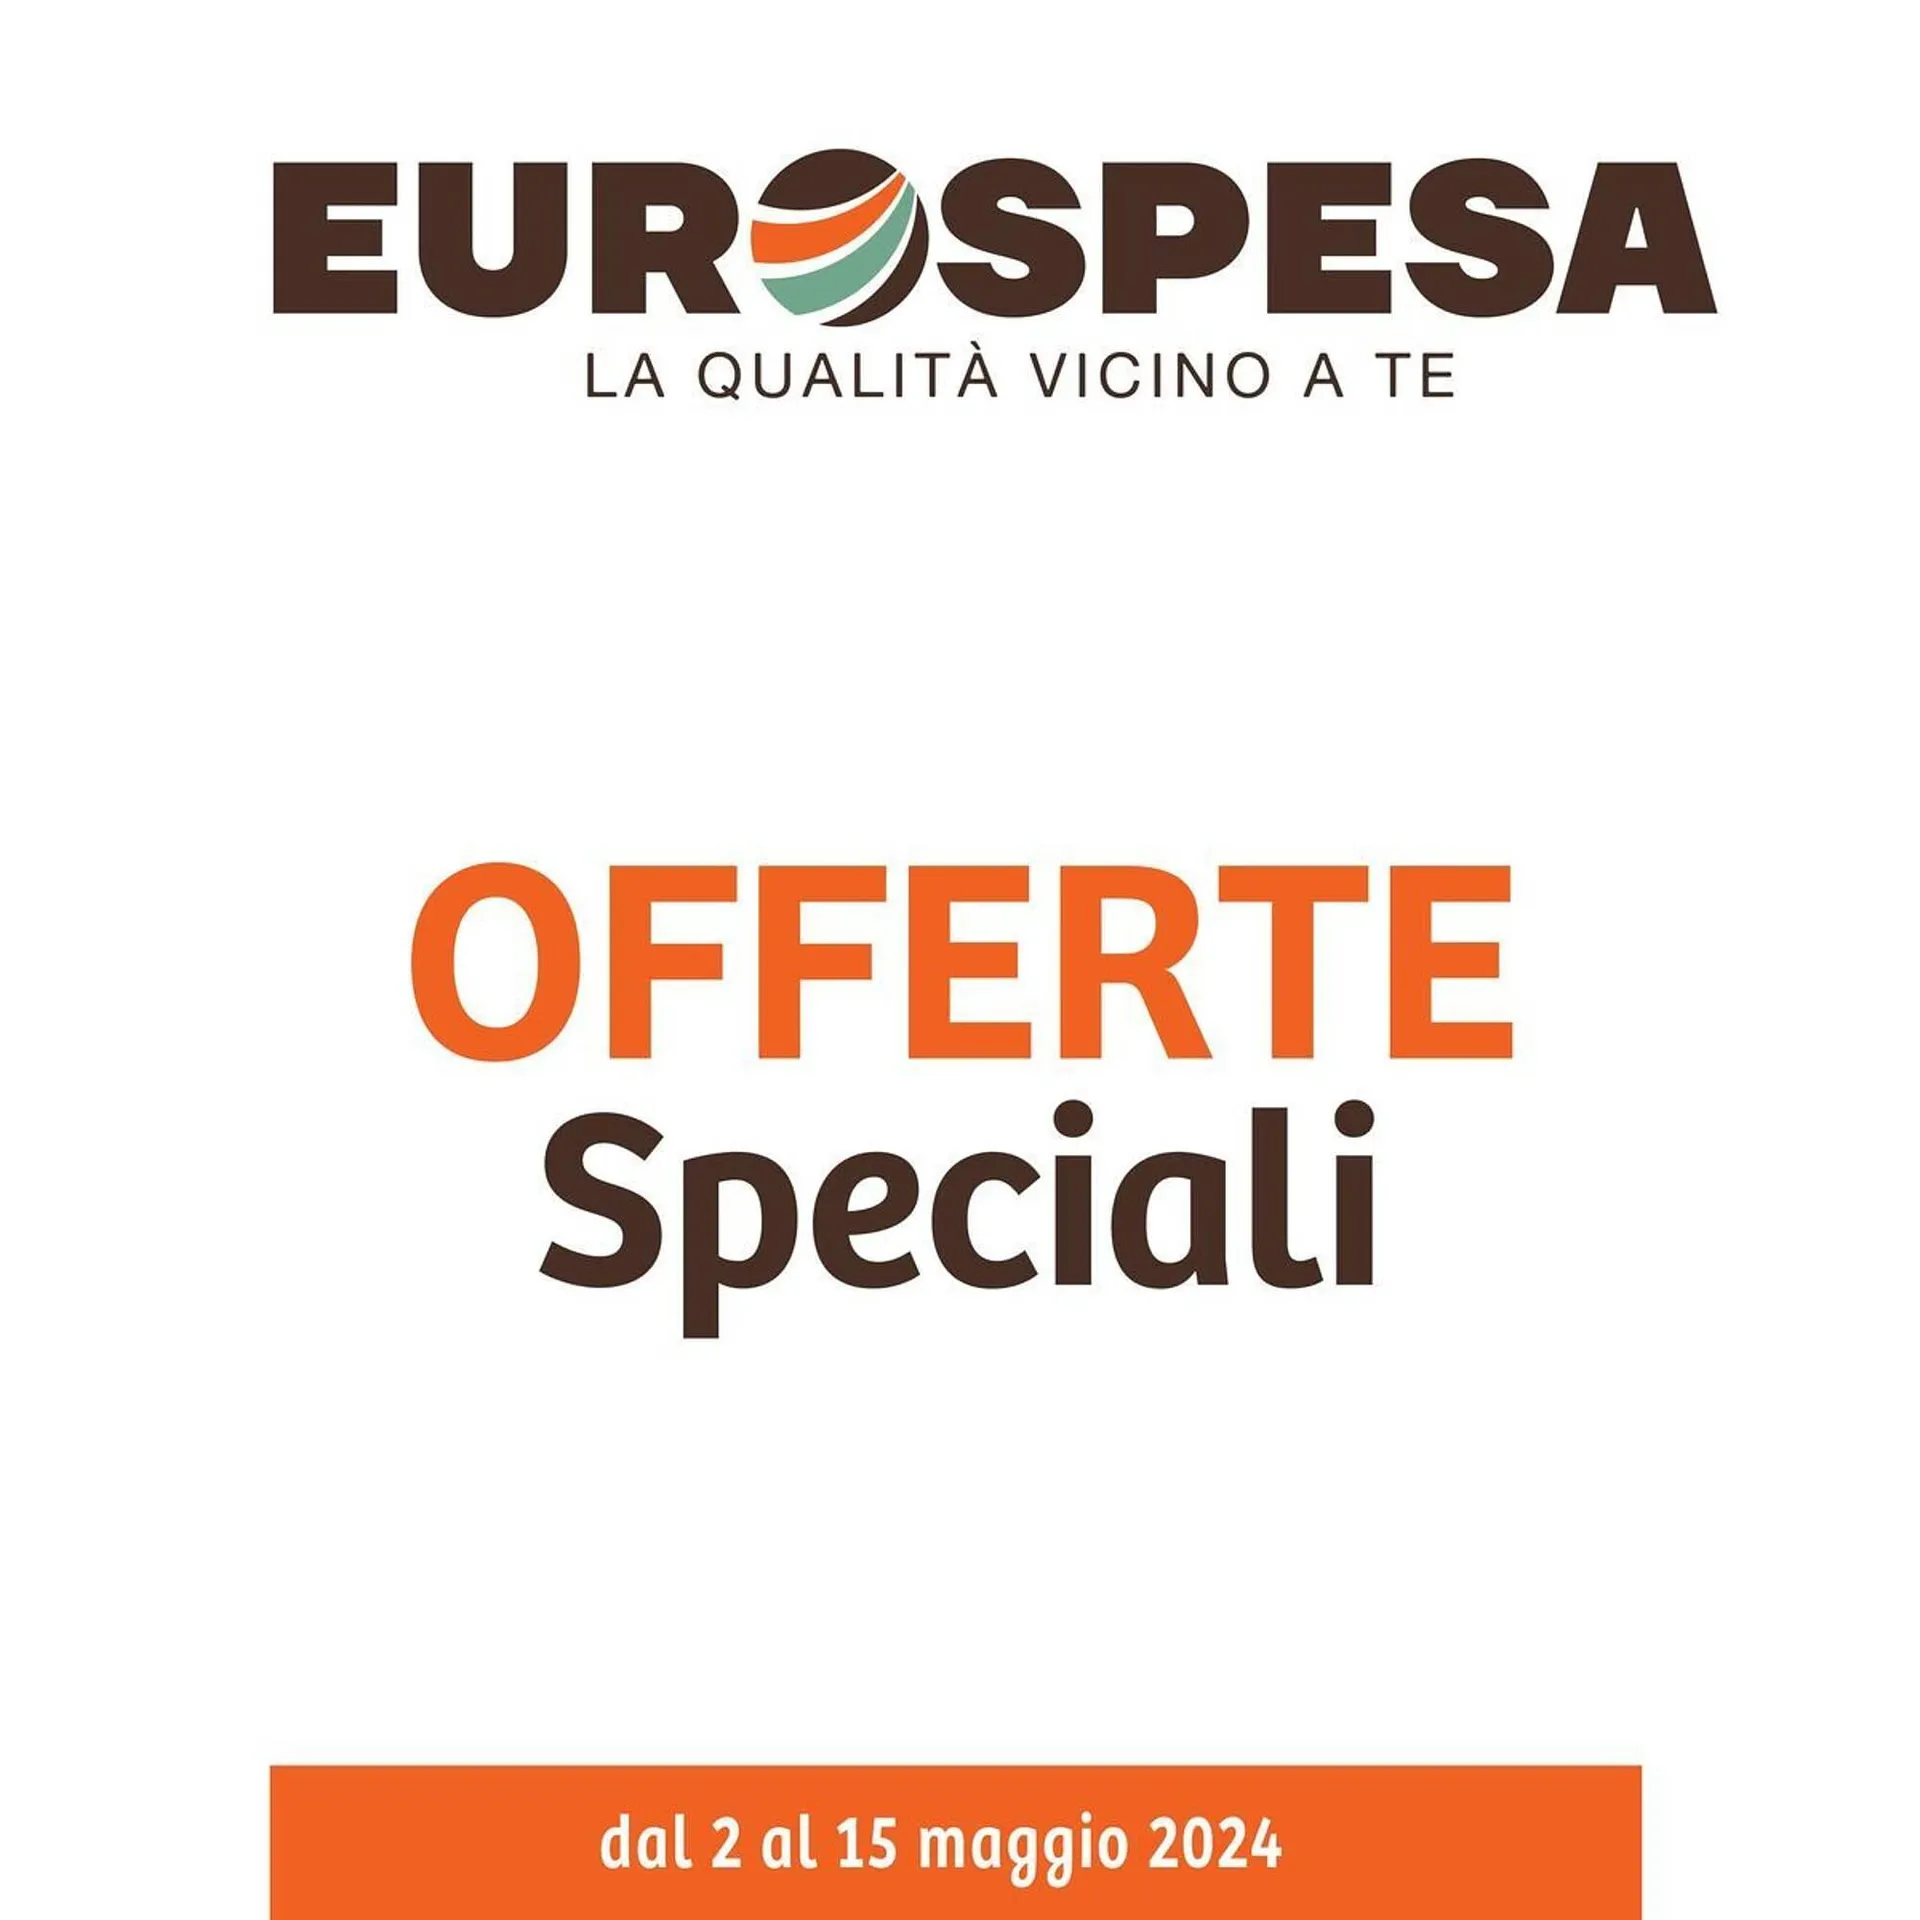 Volantino Eurospesa Speciali - 1